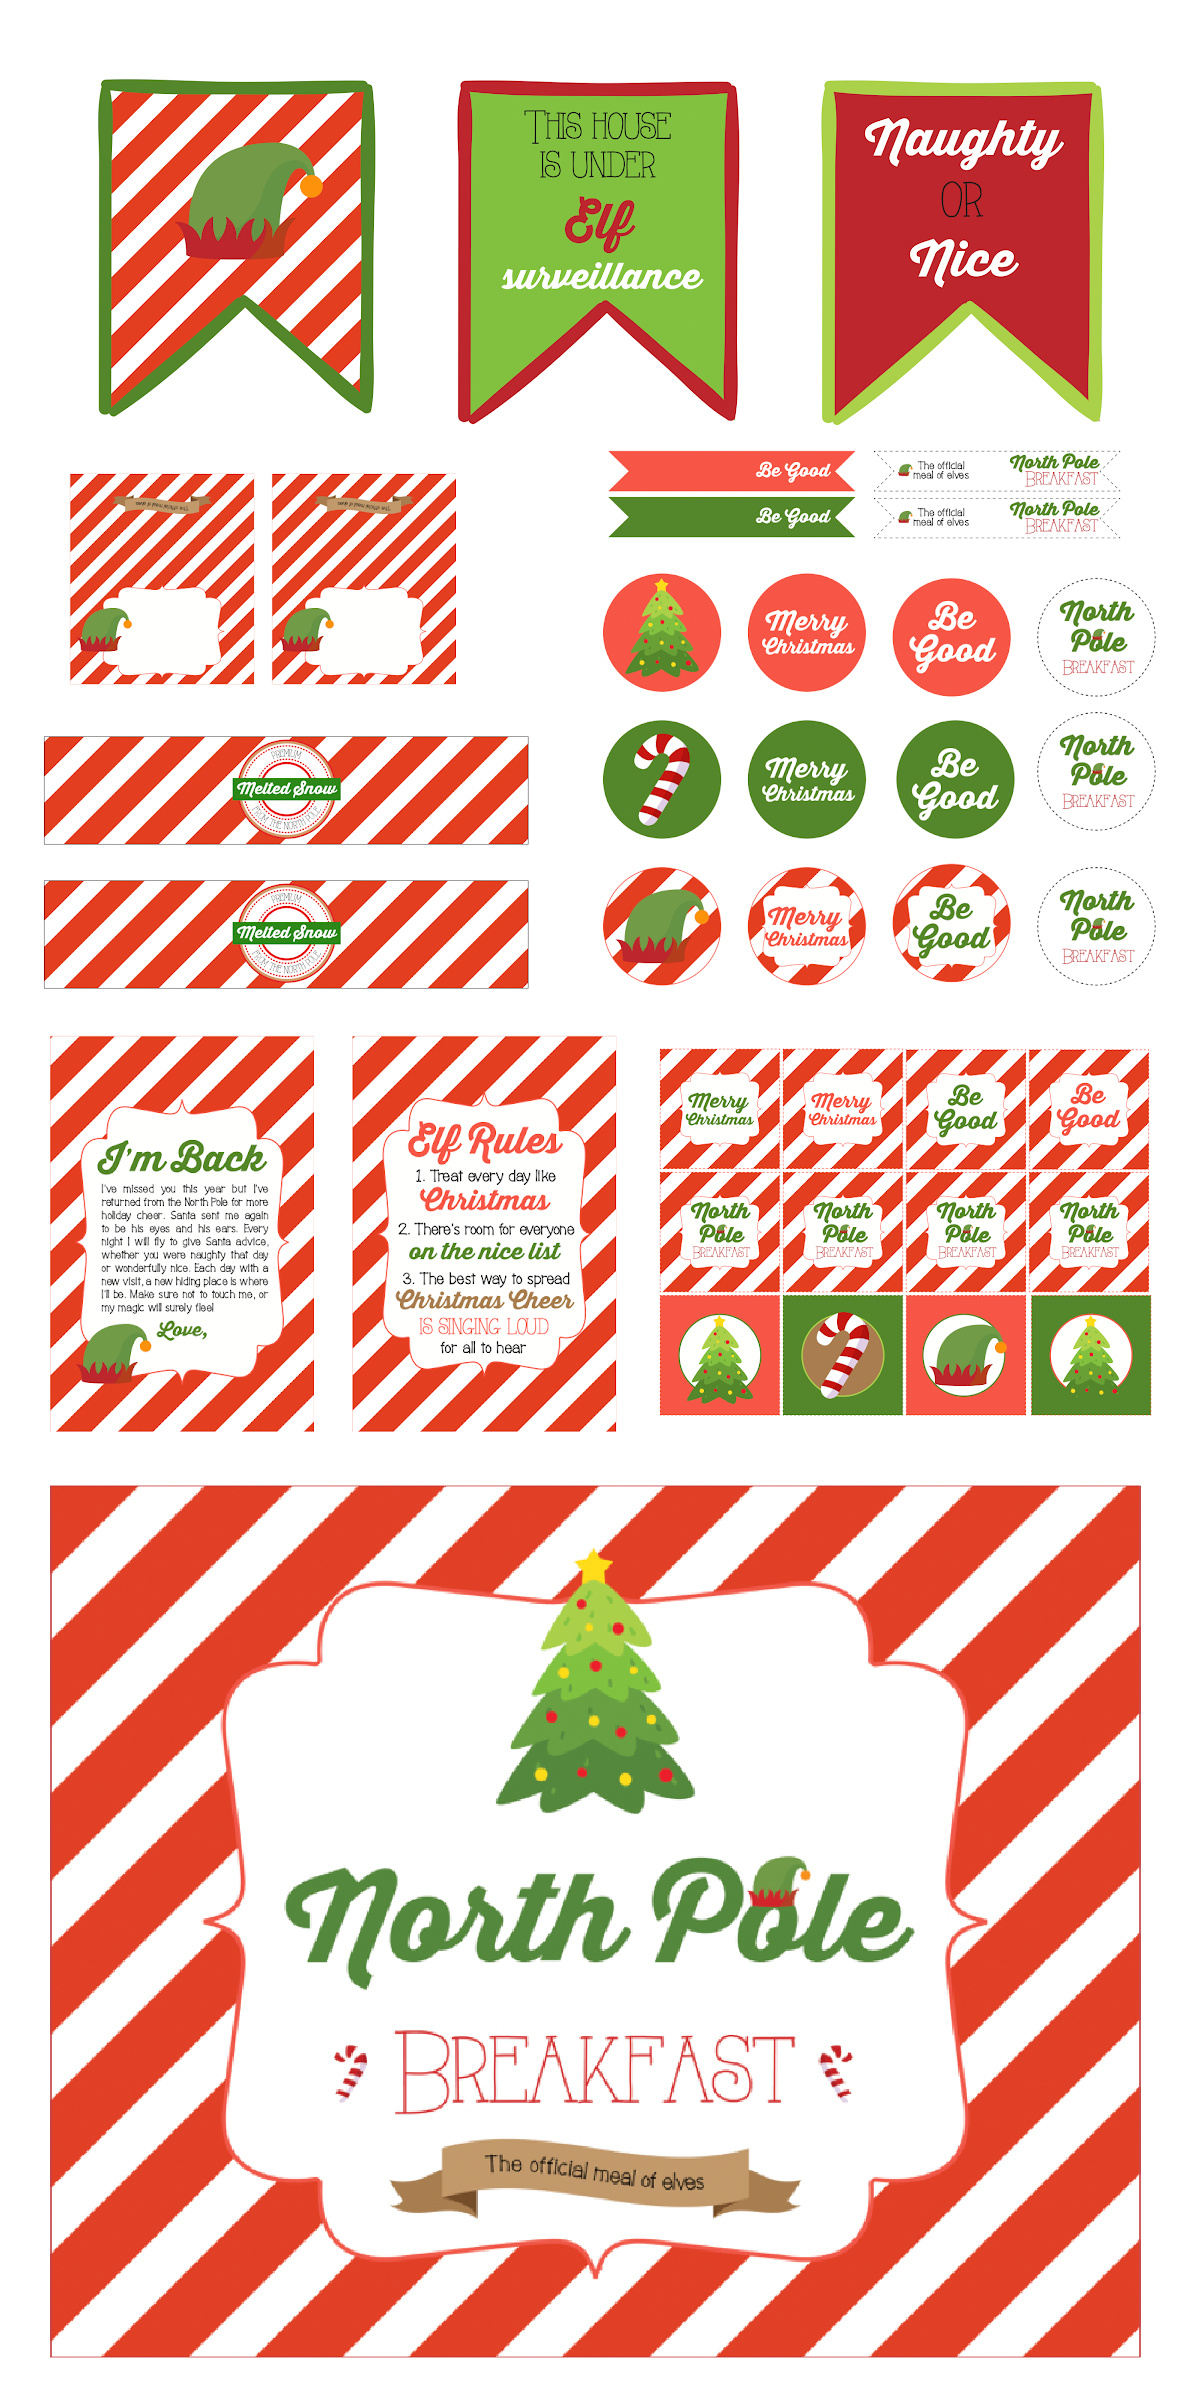 Free Elf On A Shelf North Pole Breakfast Printables!🎄 | Catch My - Elf On The Shelf Breakfast Free Printables